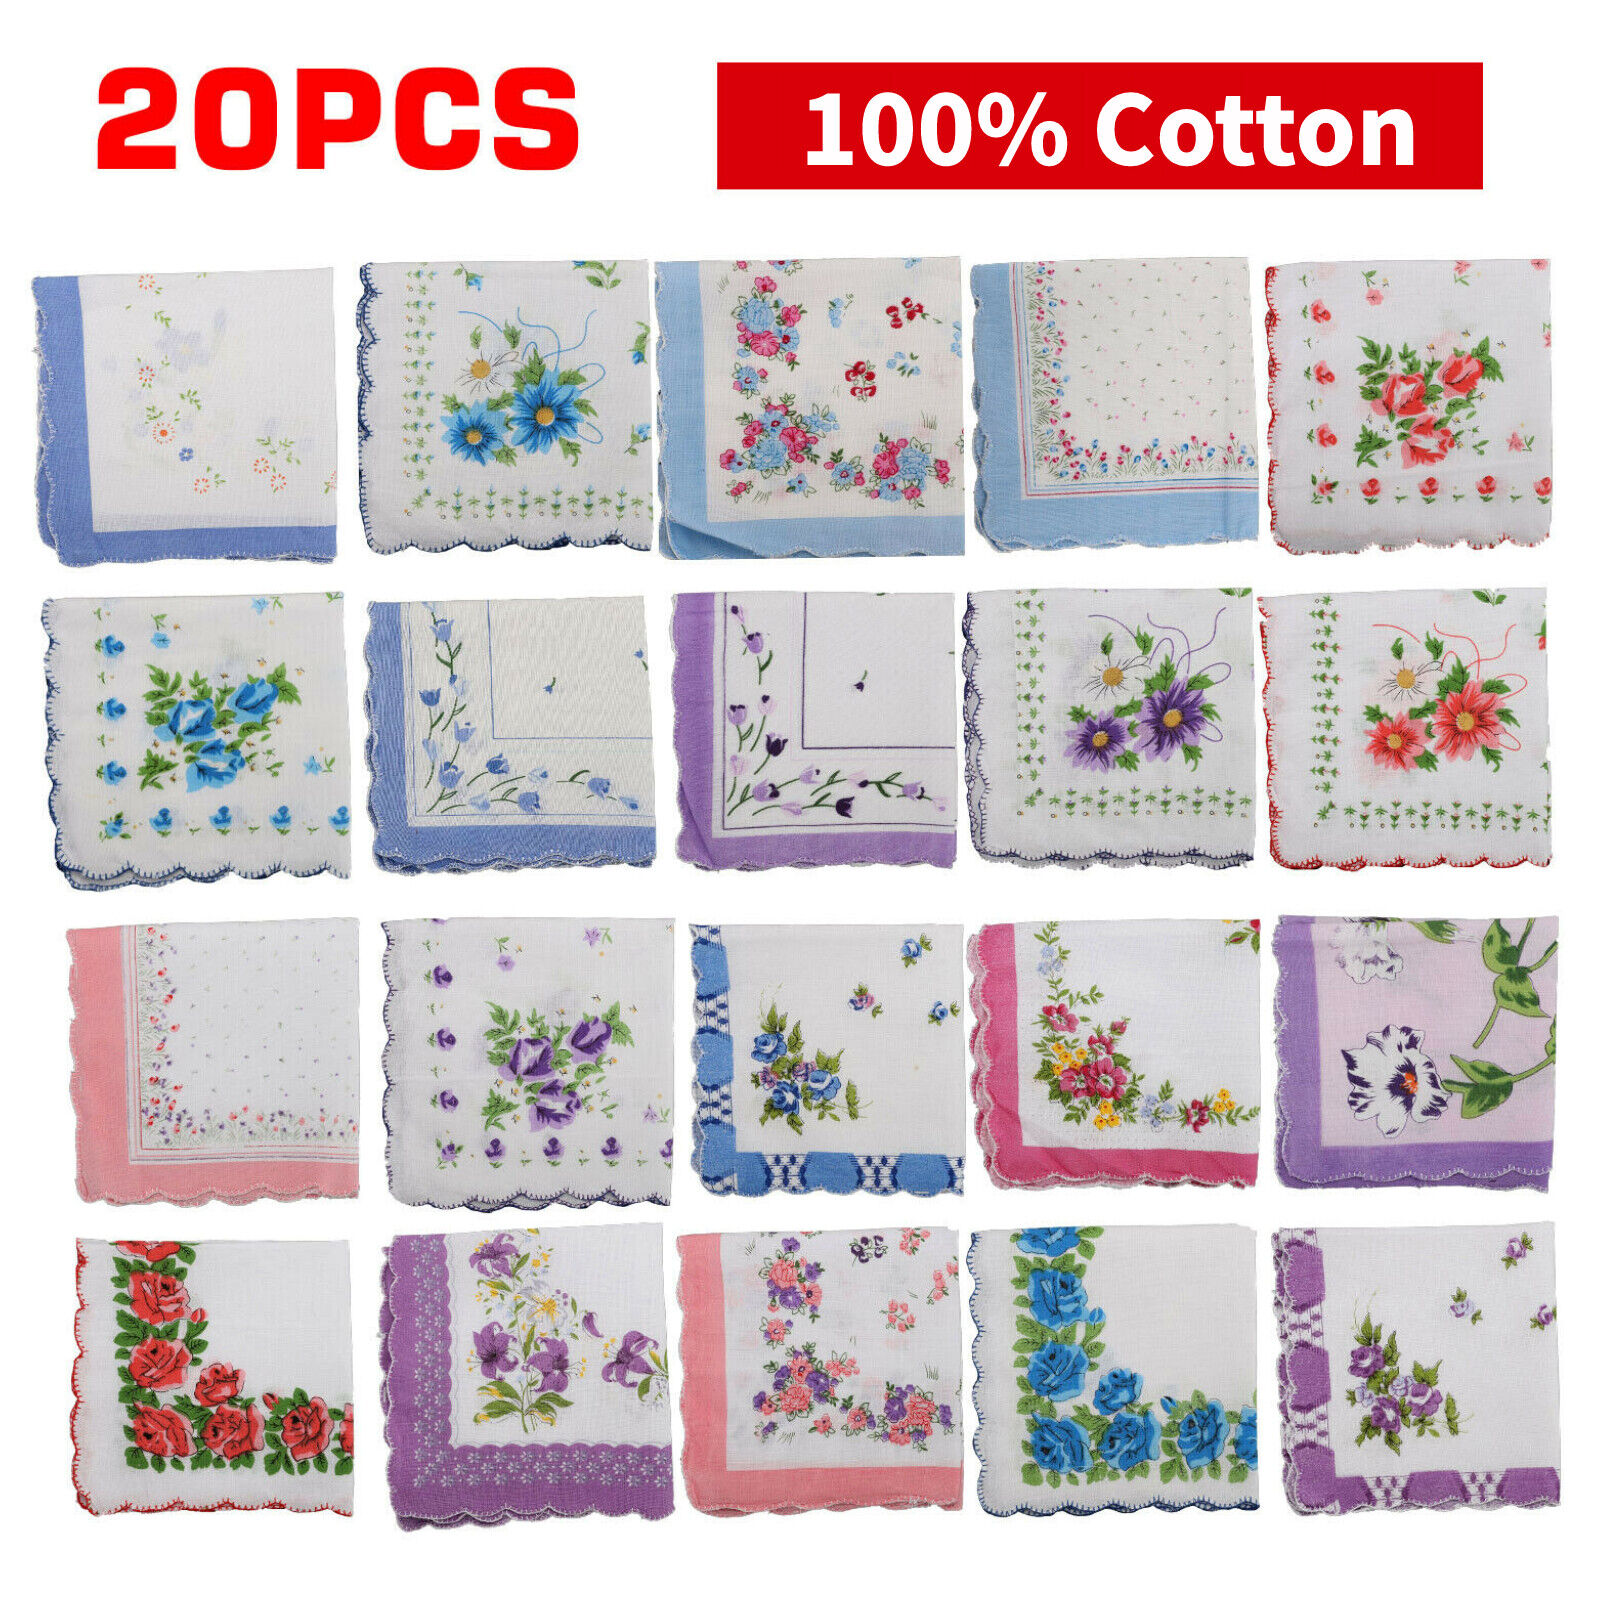 20PCS Lady Handkerchiefs 100% Cotton Hankies Pocket Vintage Classic Handkerchief